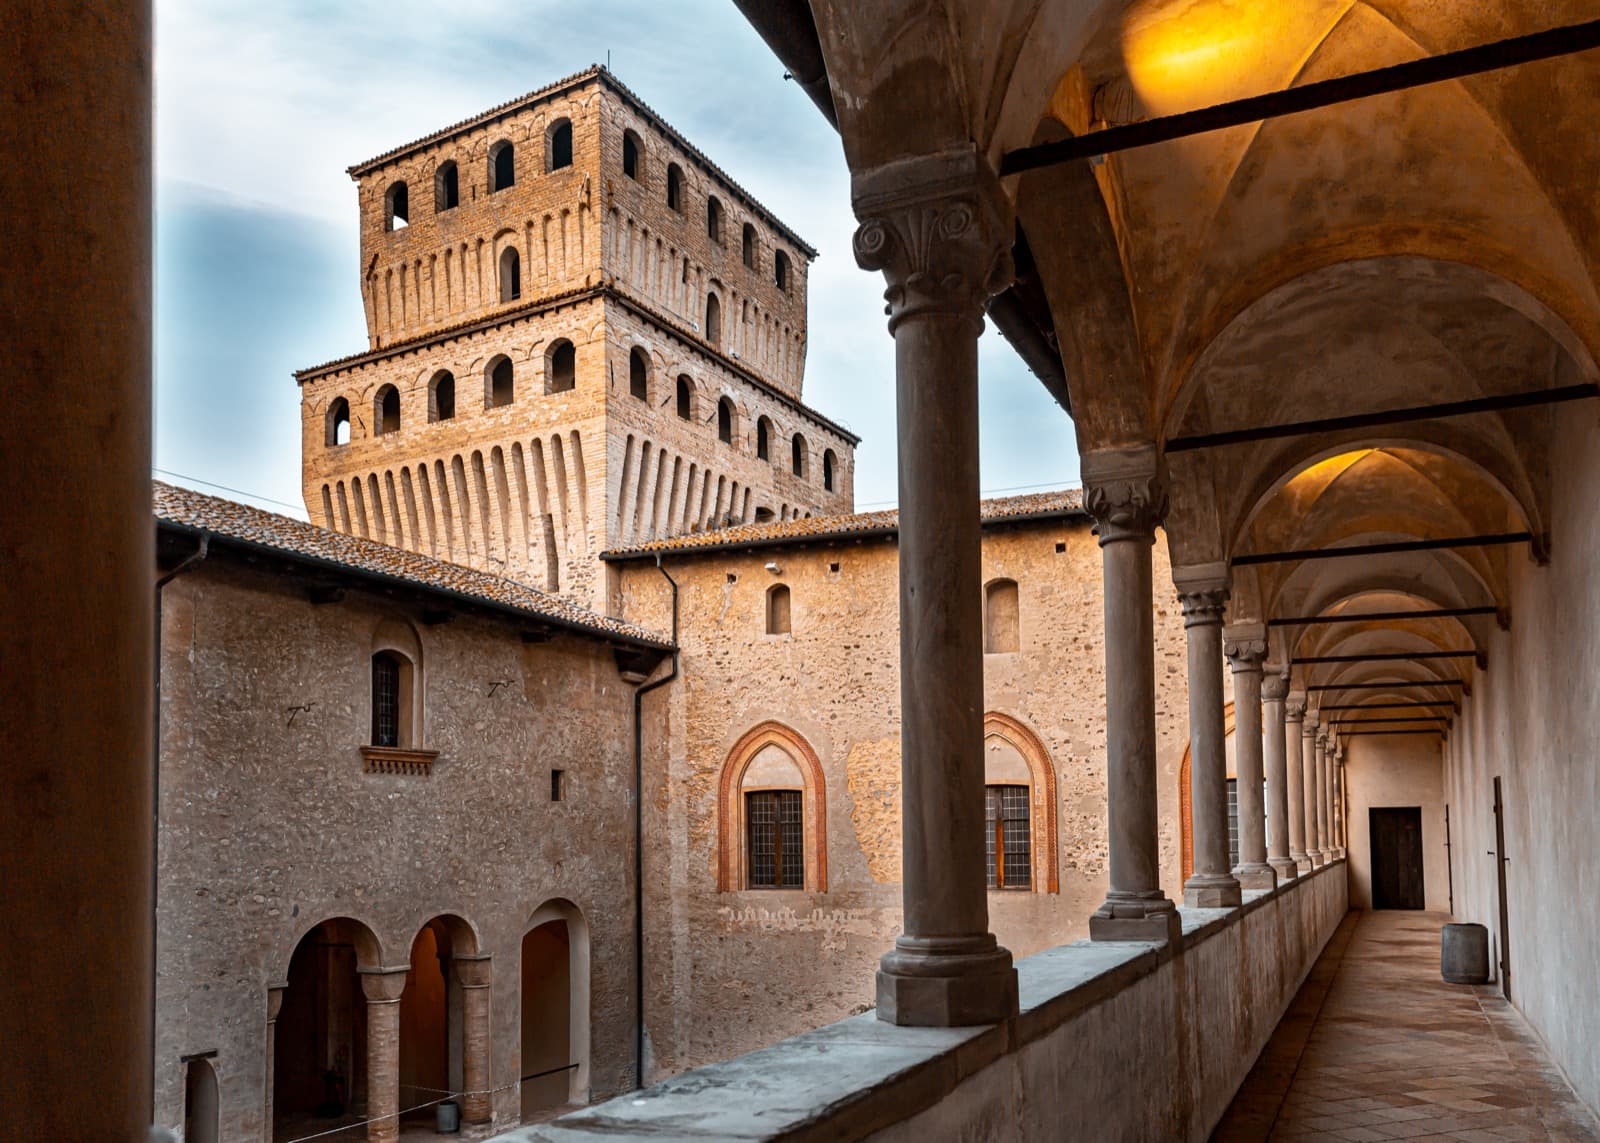 Castello di Torrechiara Ph. Floriana Avellino via shutterstock